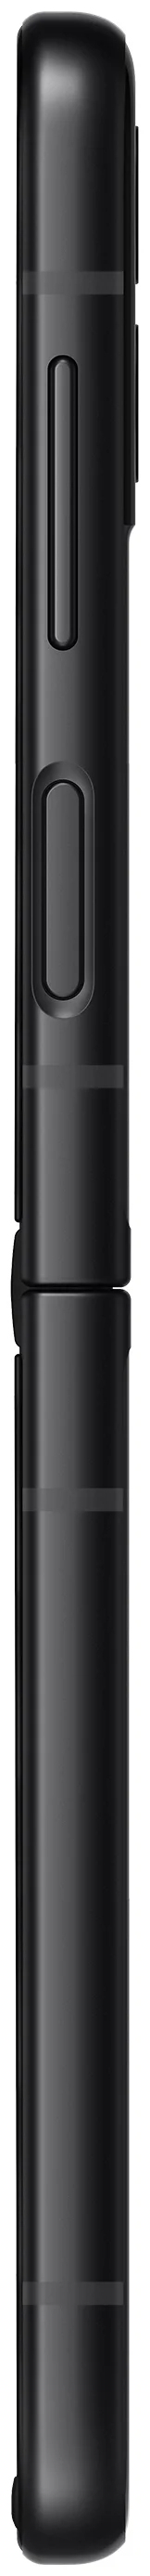 Смартфон Samsung Galaxy Z Flip3 128GB, черный - фото 4